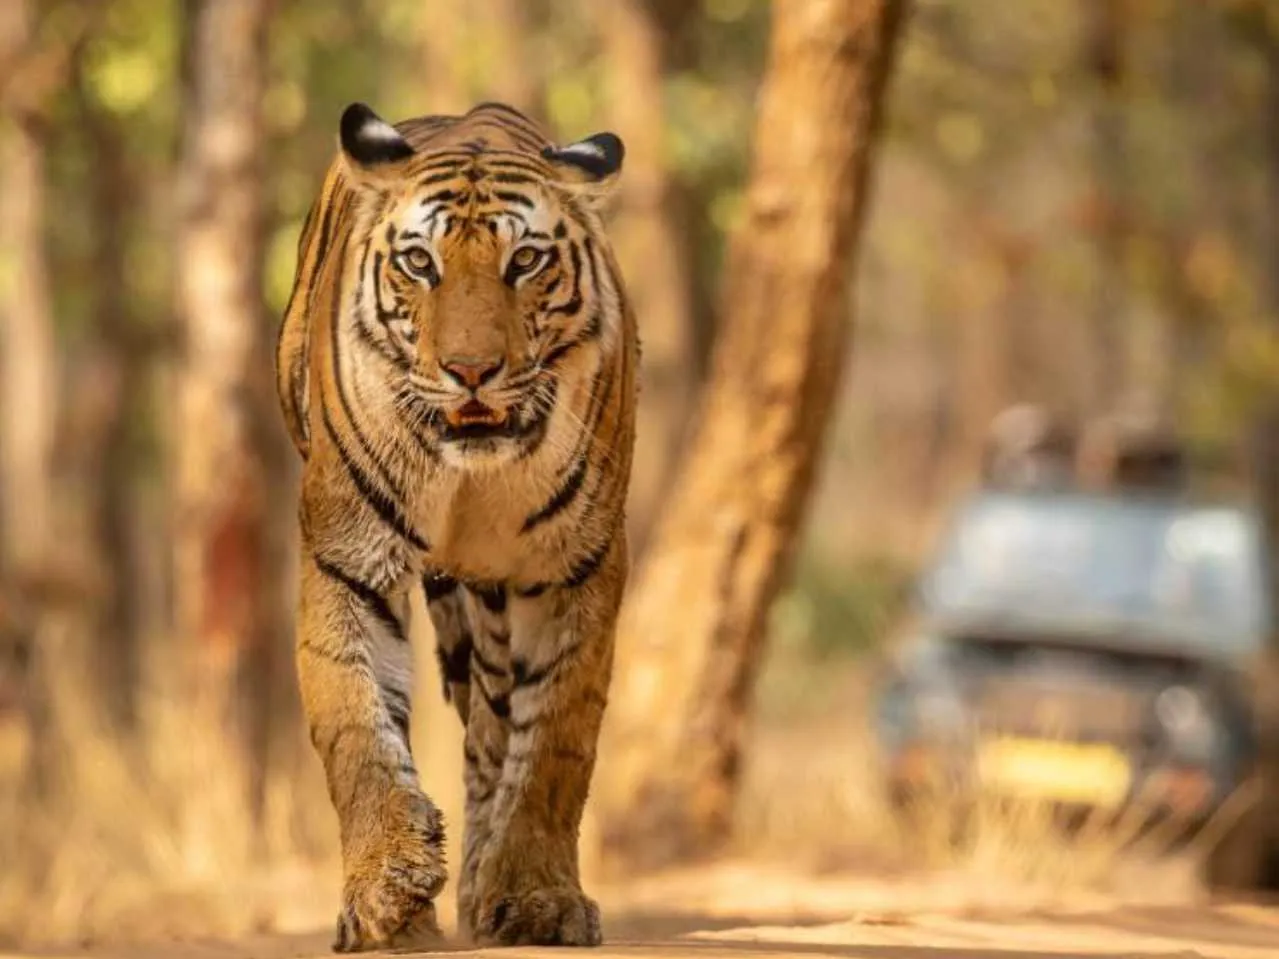 Bandhavgarh tiger reserve